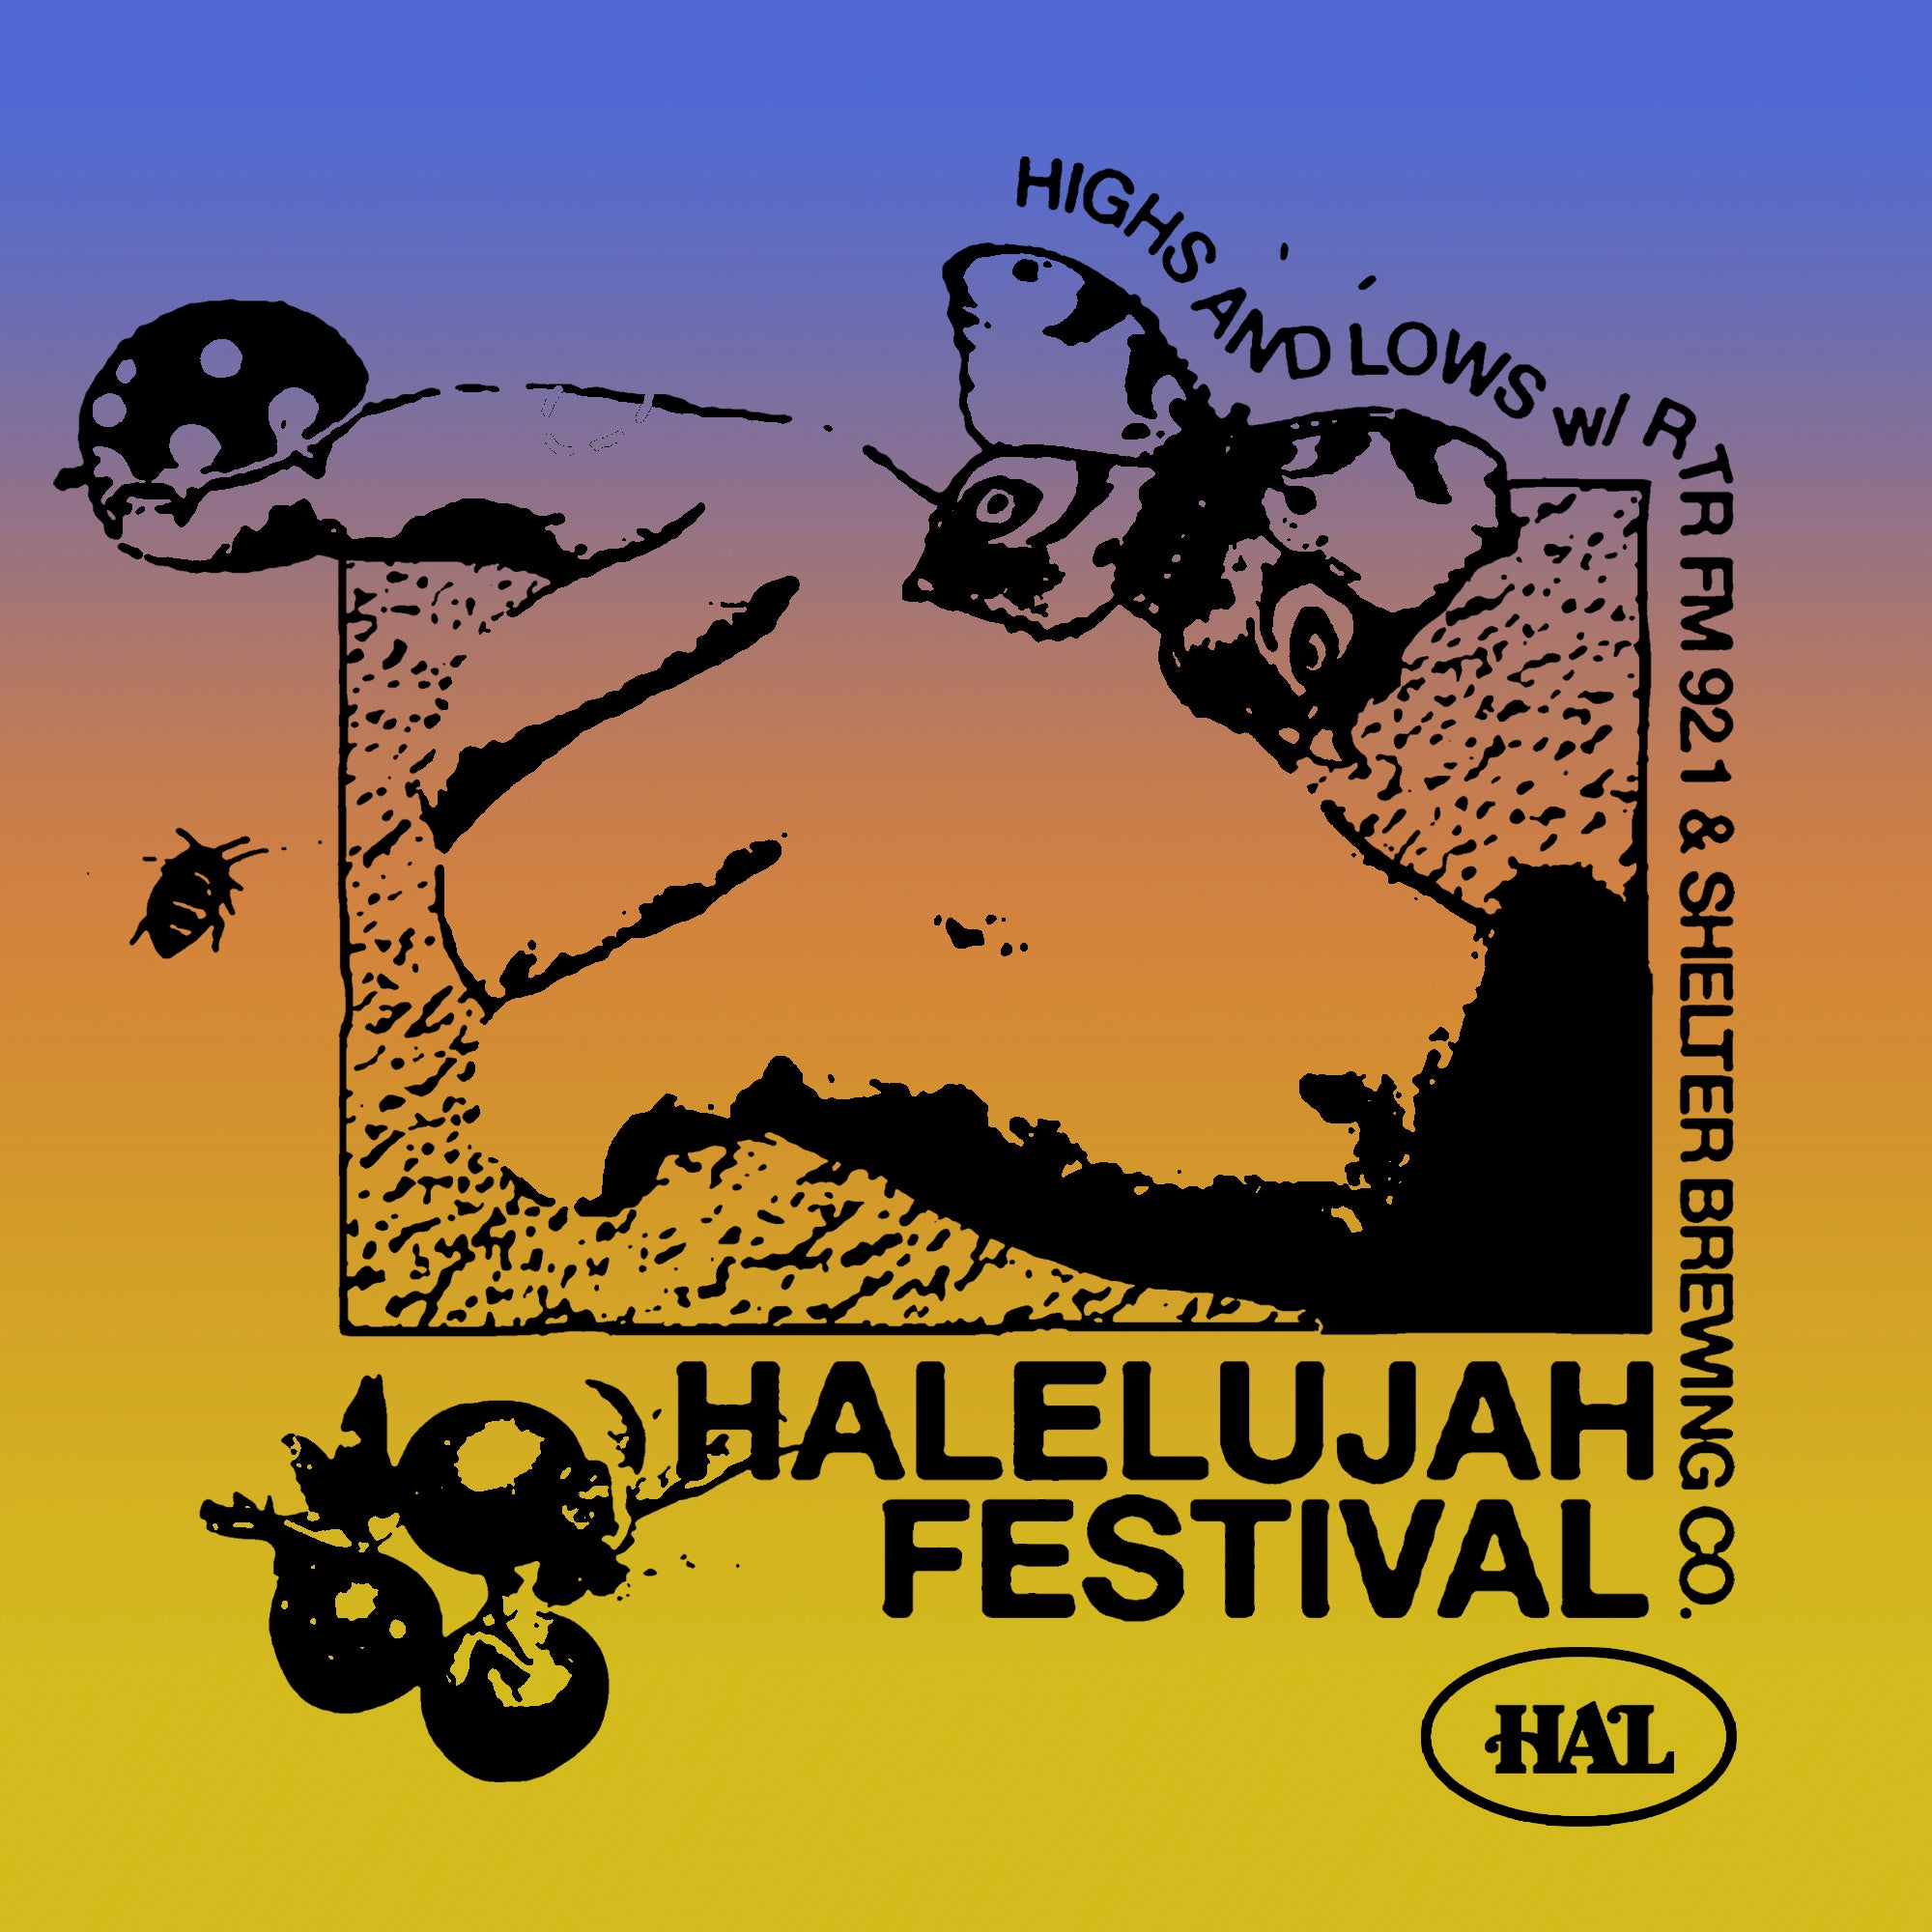 HALELUJAH FESTIVAL - SATURDAY JANUARY 29TH